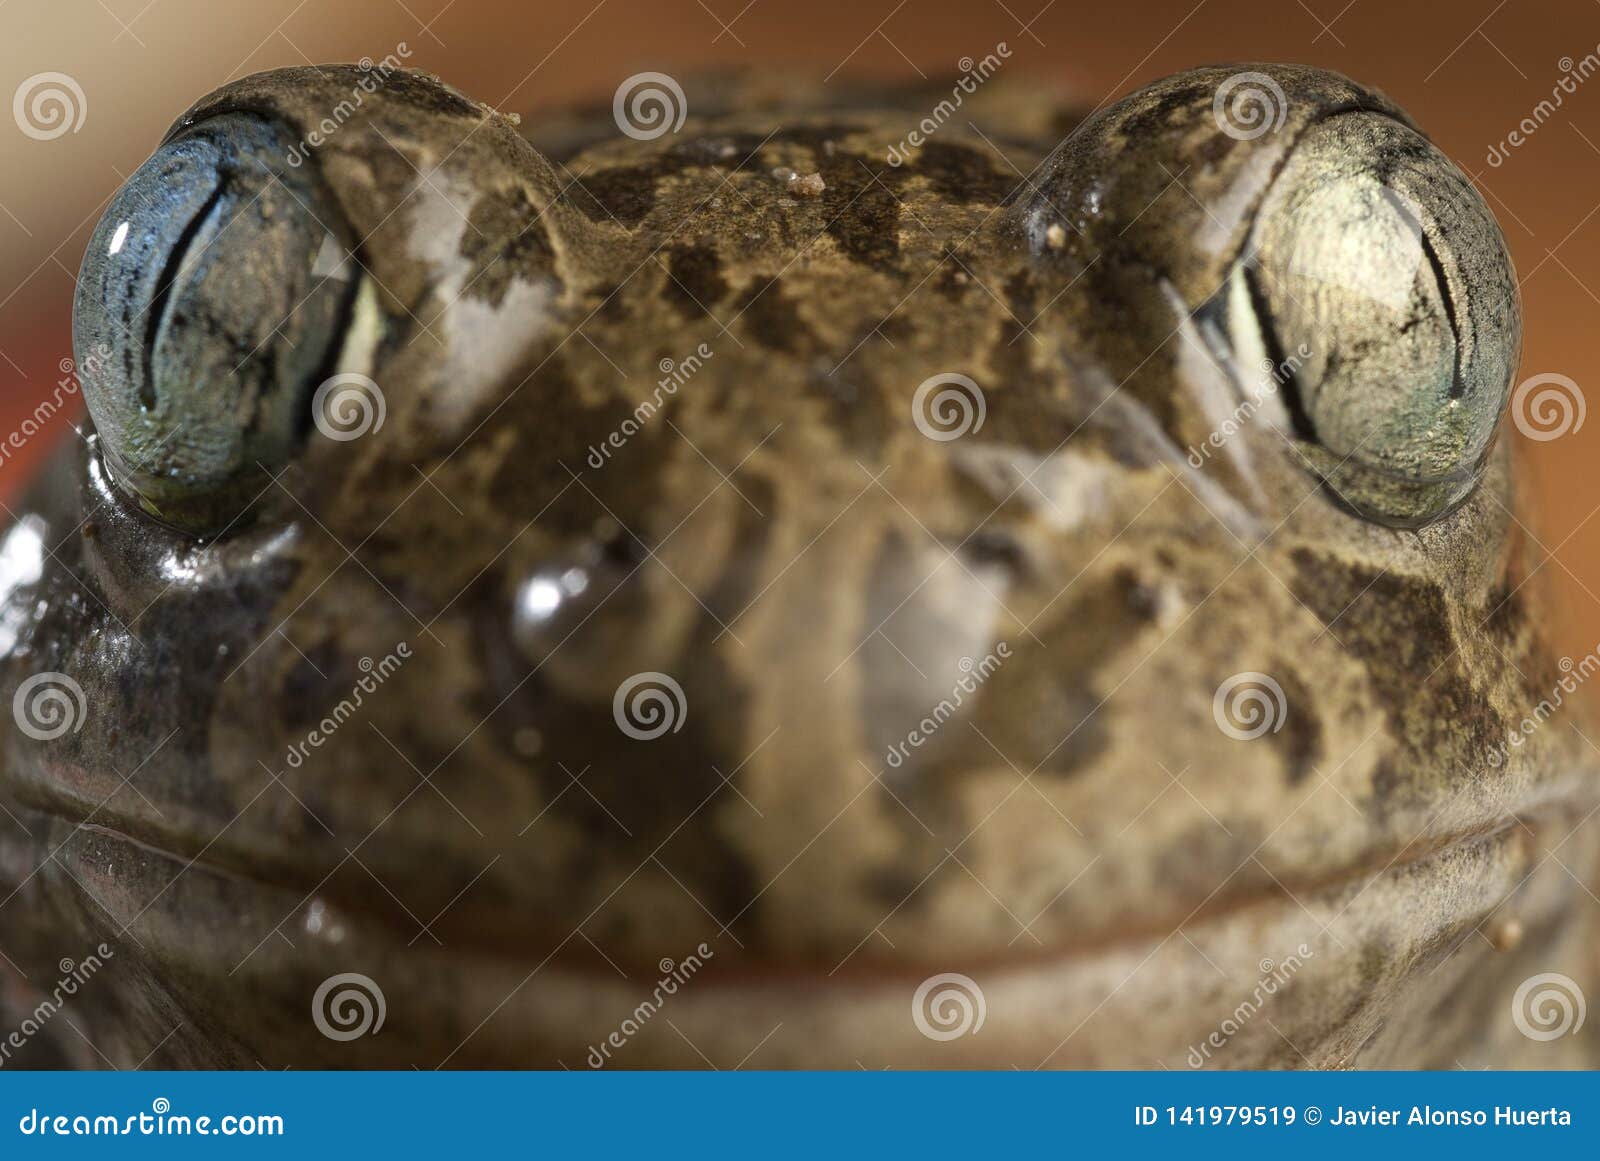 spadefoot toad, pelobates cultripes, amphibian